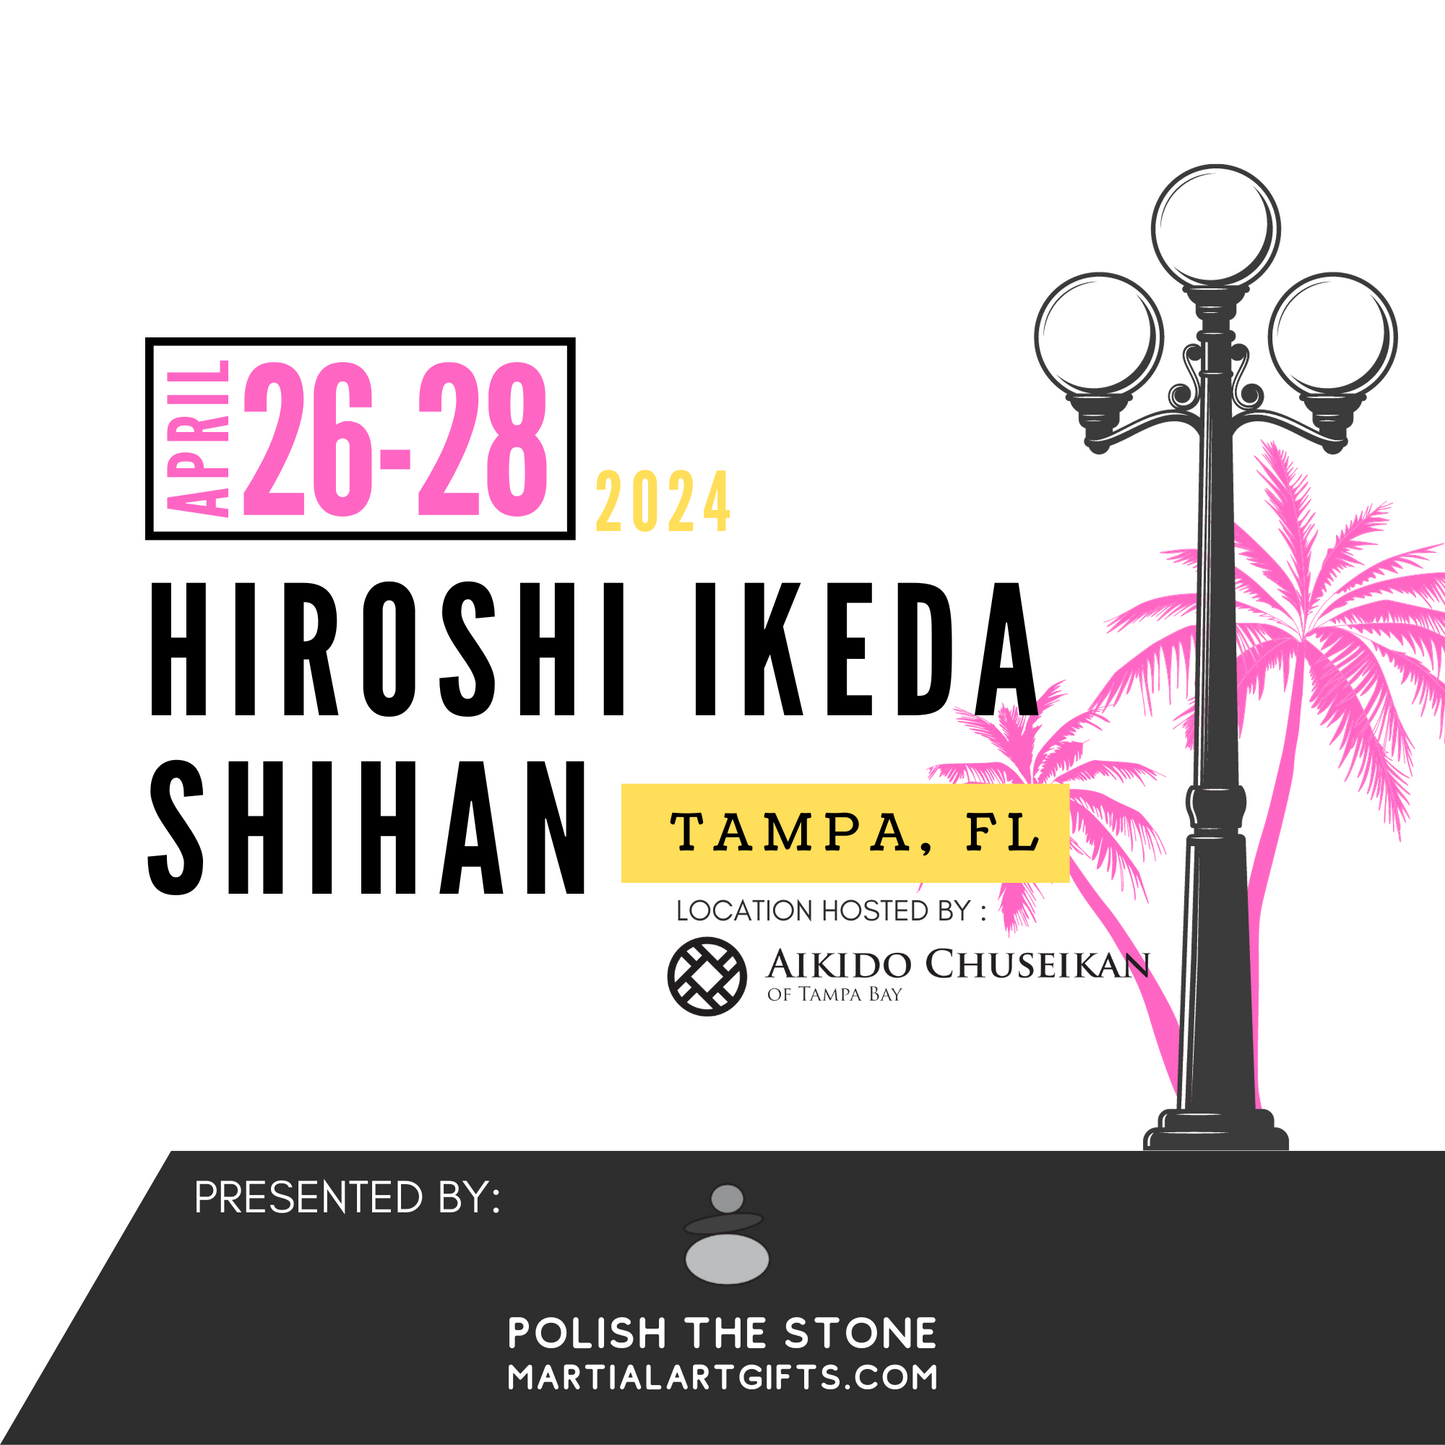 Hiroshi Ikeda Shihan in Tampa, FL April 26-28th, 2024 for 3 day Aikido seminar.